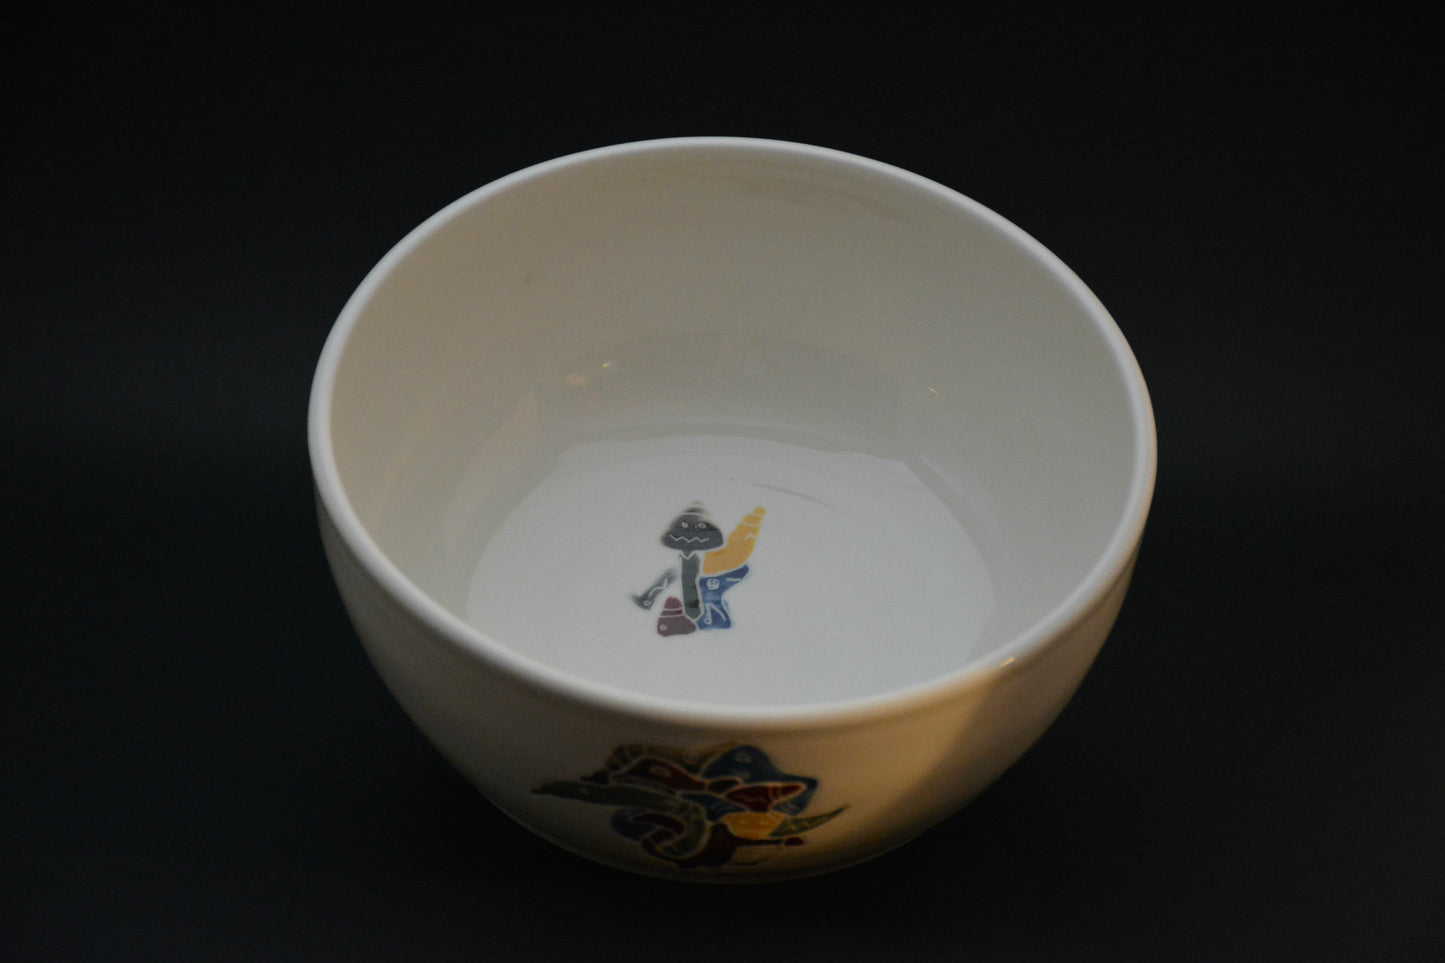 BL-17 Ceramic Bowl - Porcelain bowl